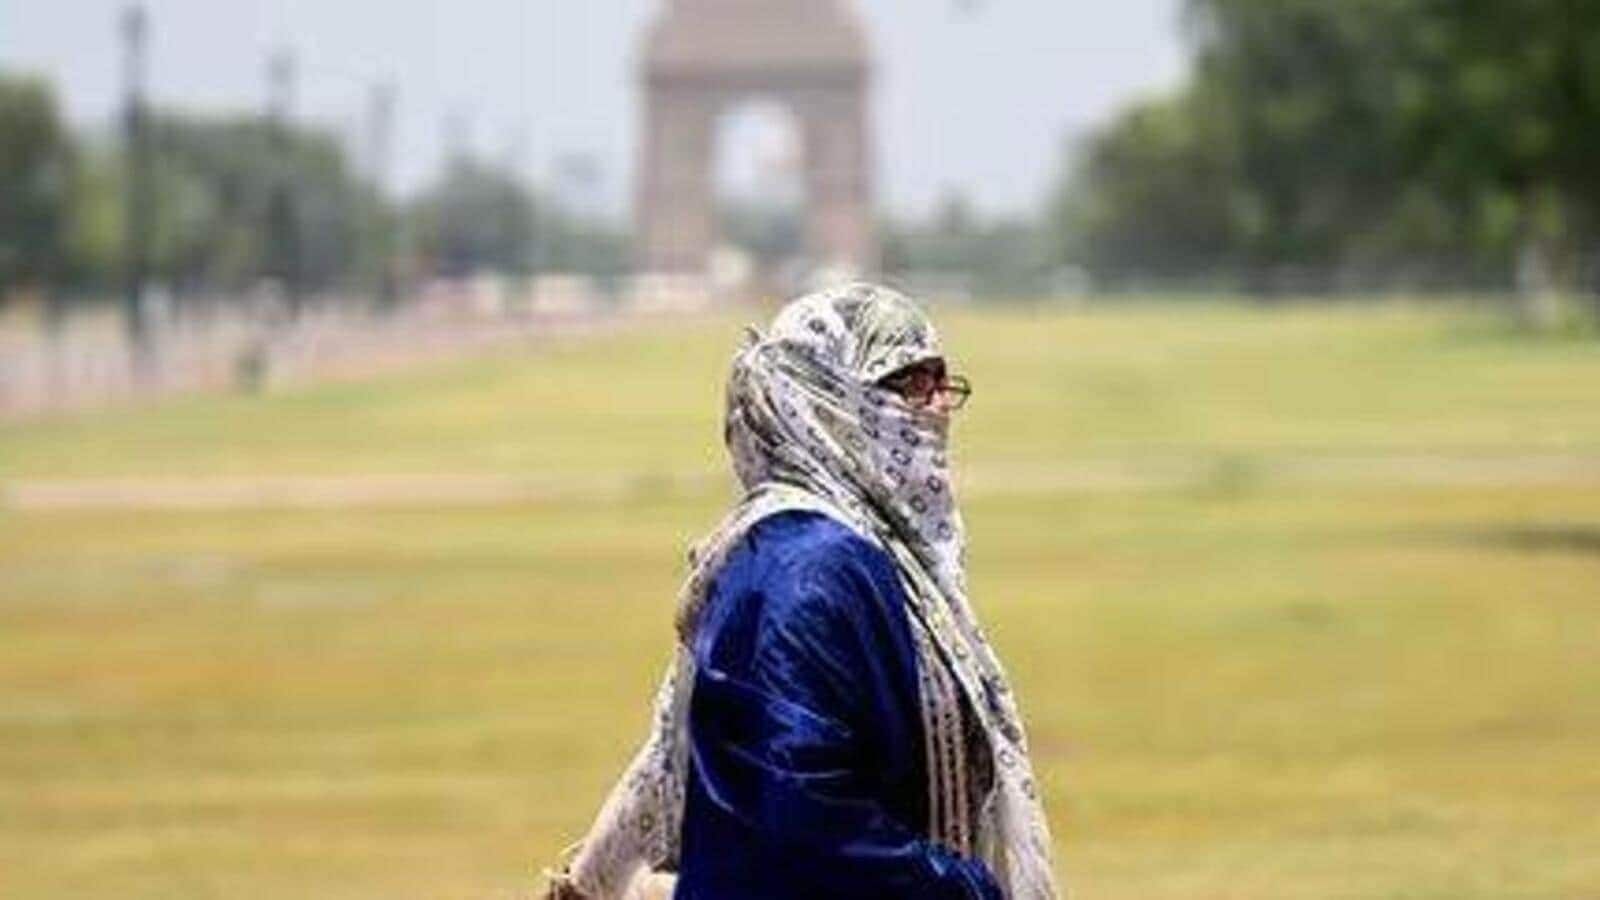 Northwest India recorded its hottest June since 1901: IMD 